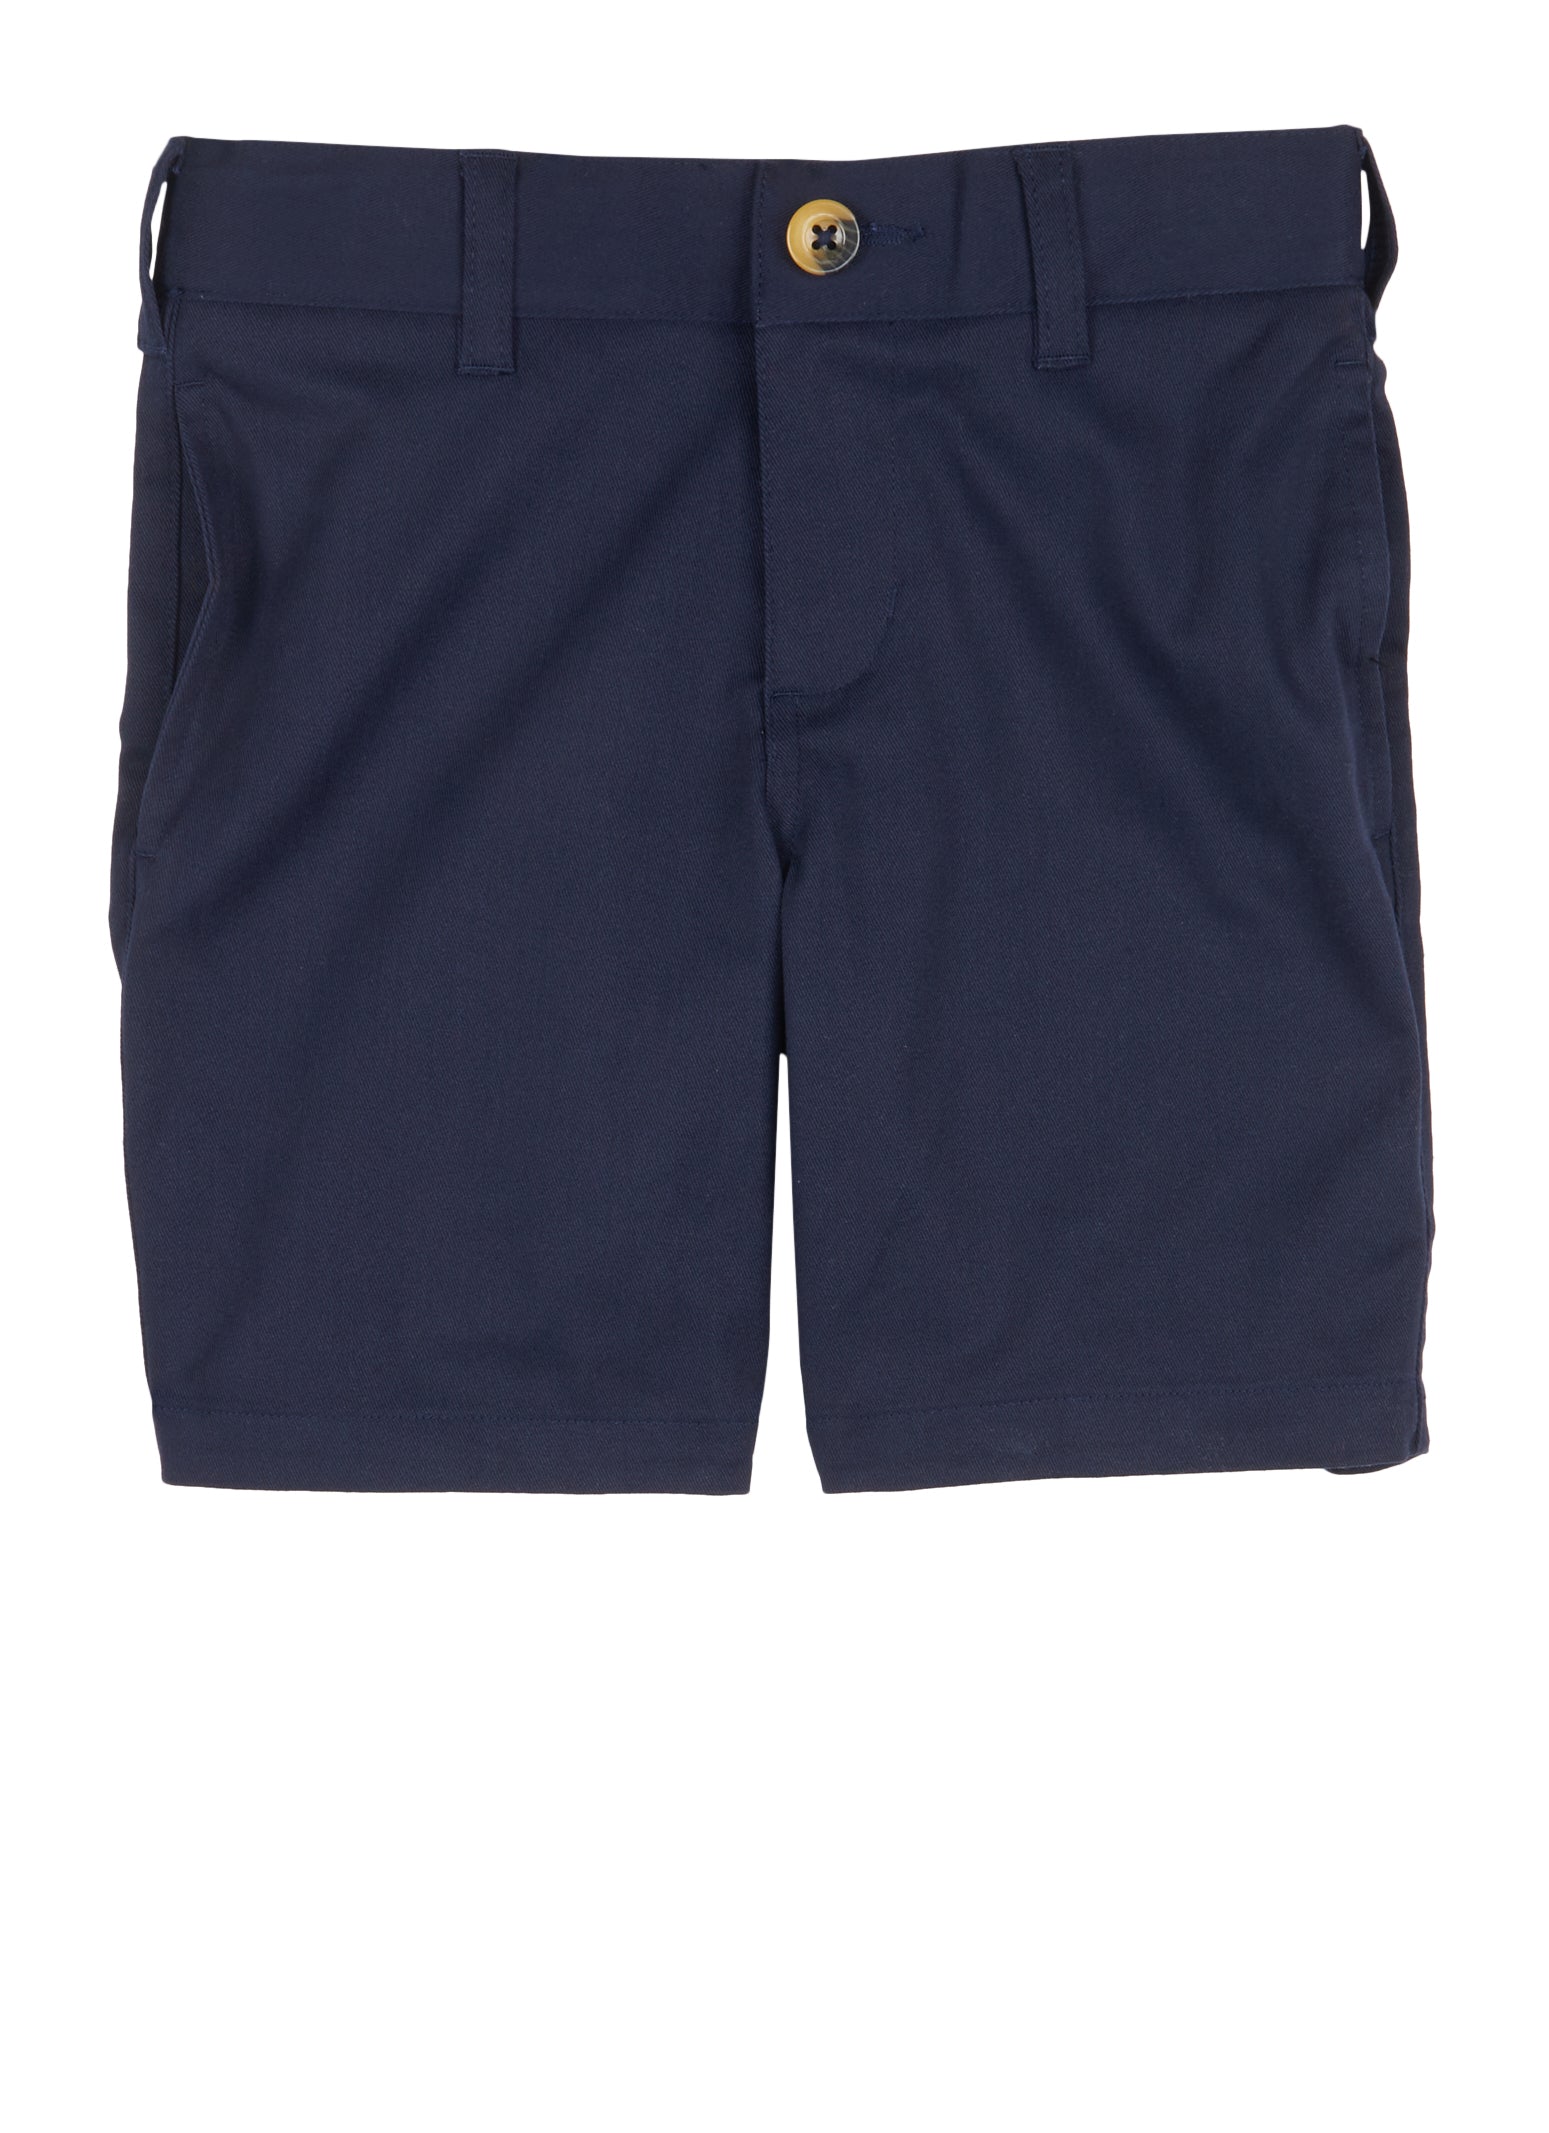 French Toast Boys 4-7 Button Front Khaki Shorts, Blue, Size 6